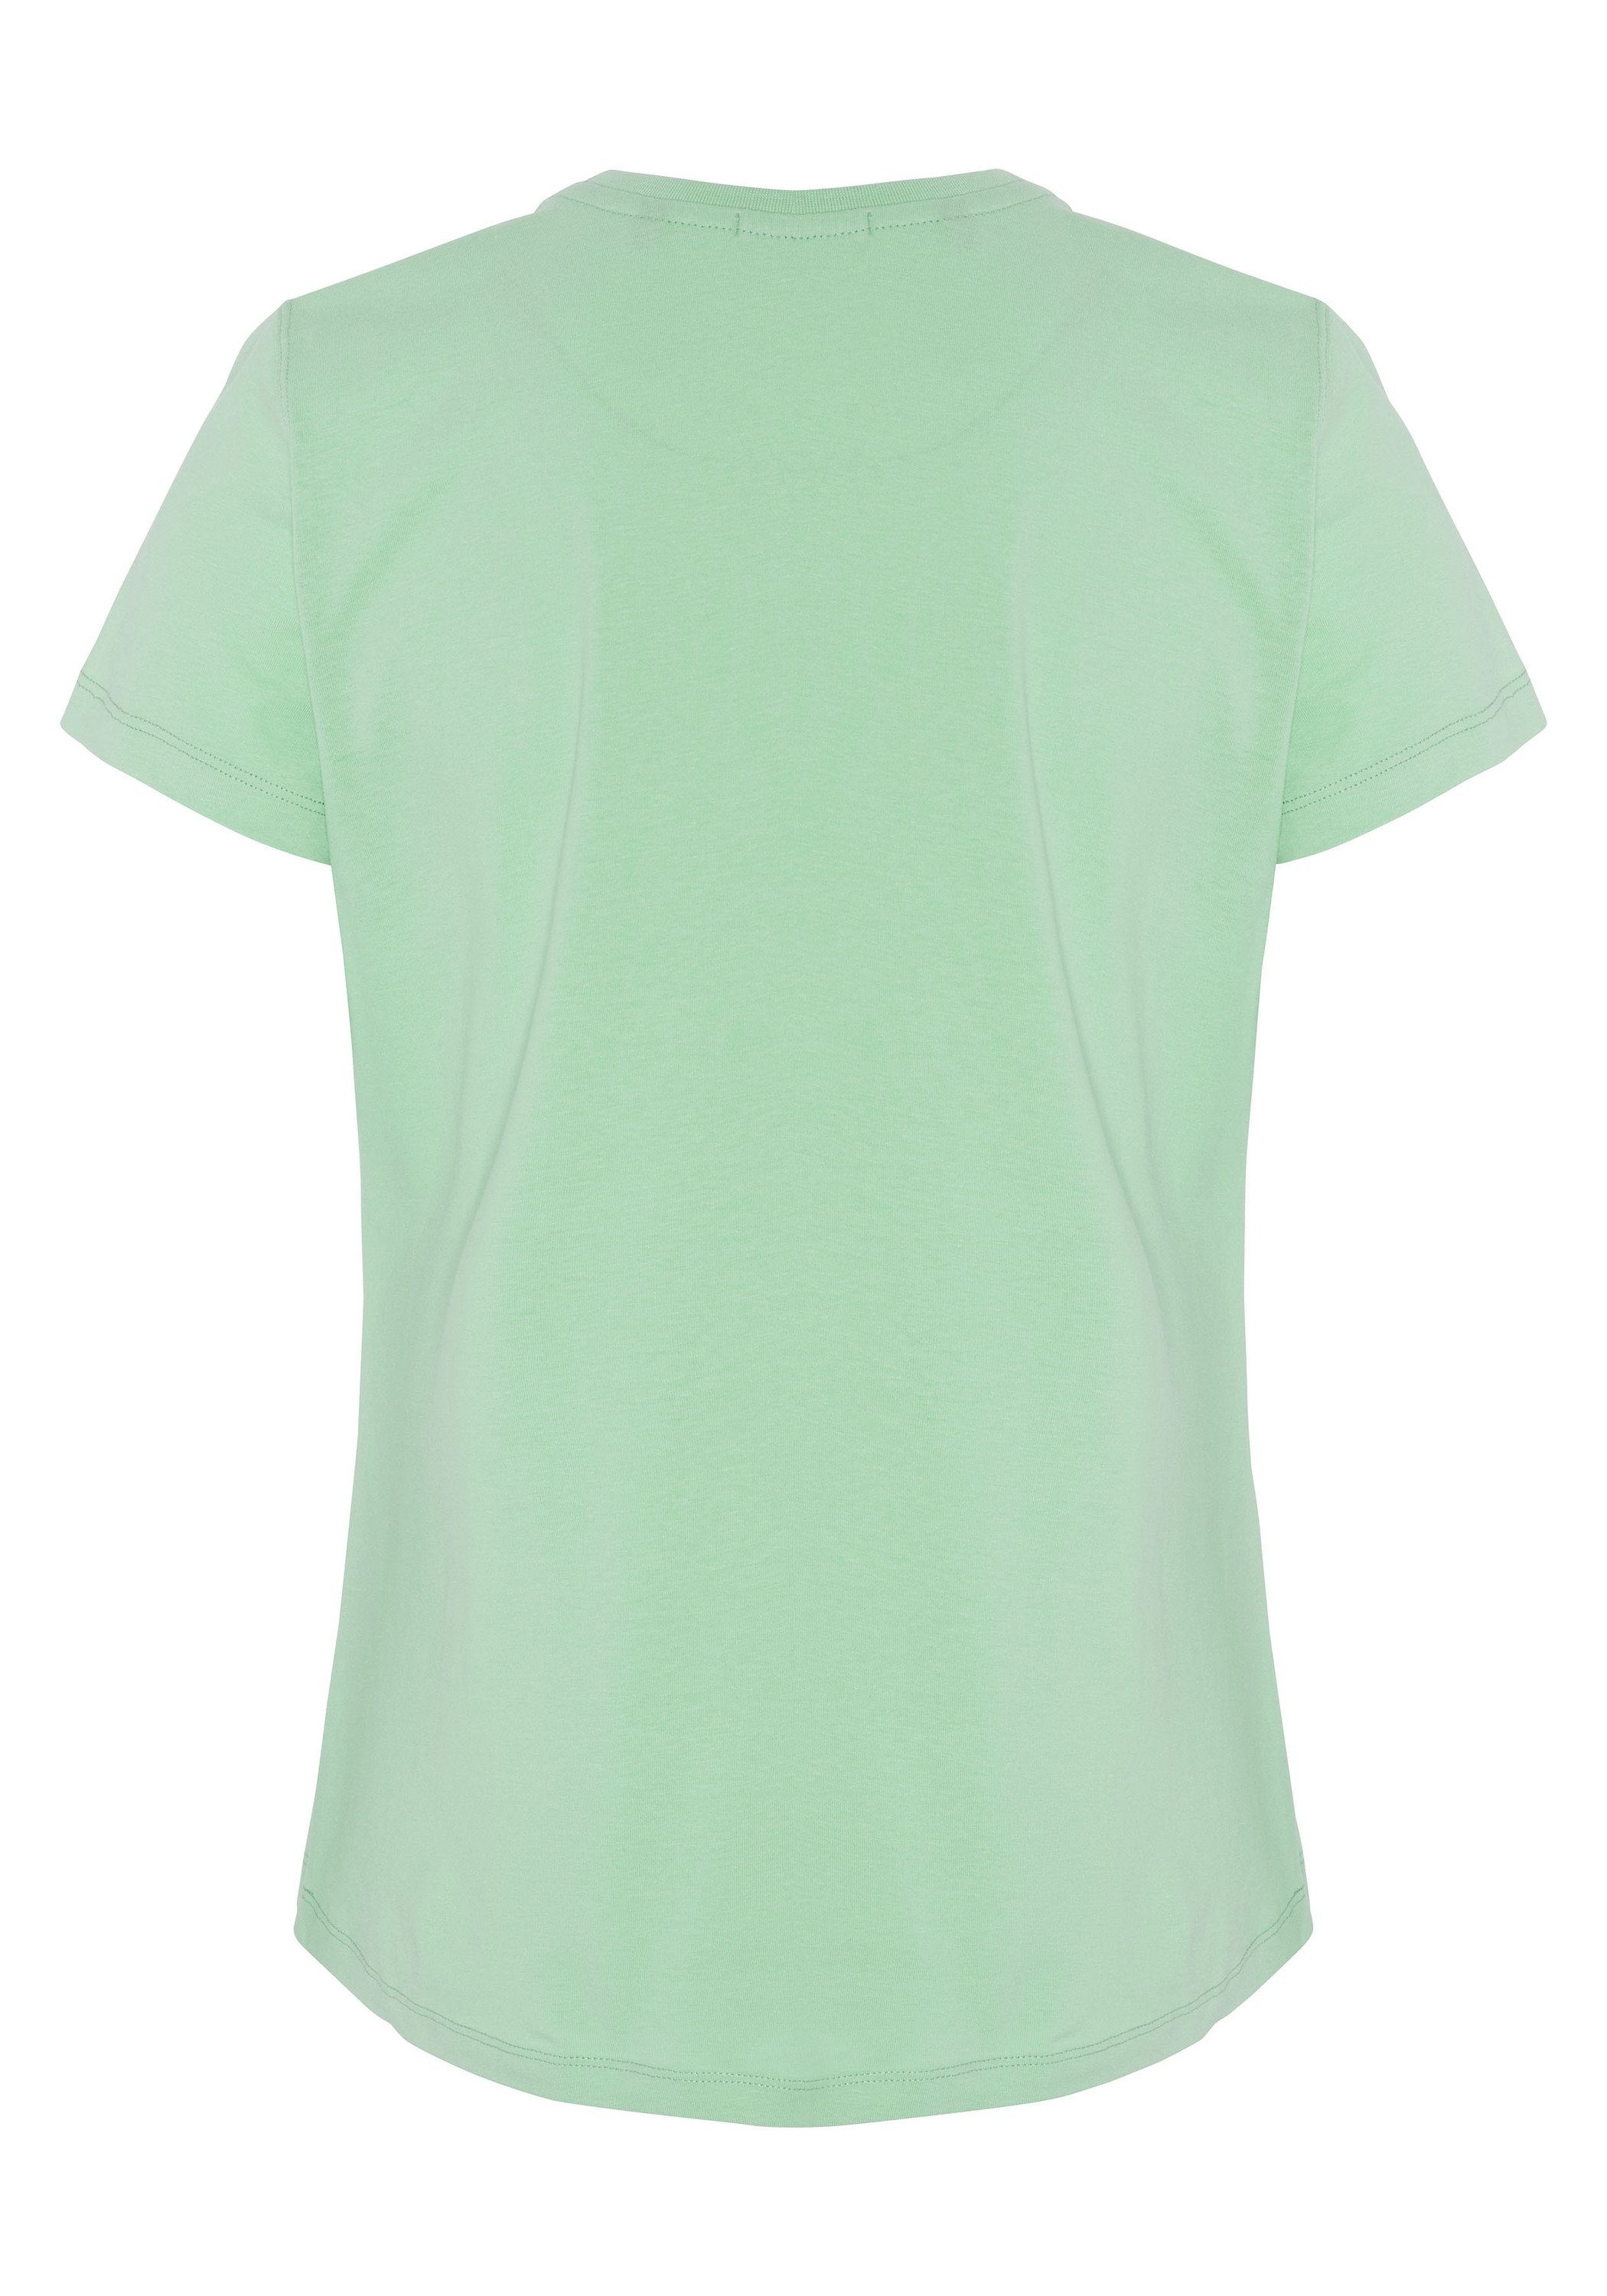 Chiemsee Print-Shirt Neptune mit 1 Frontprint Green farbenfrohem T-Shirt